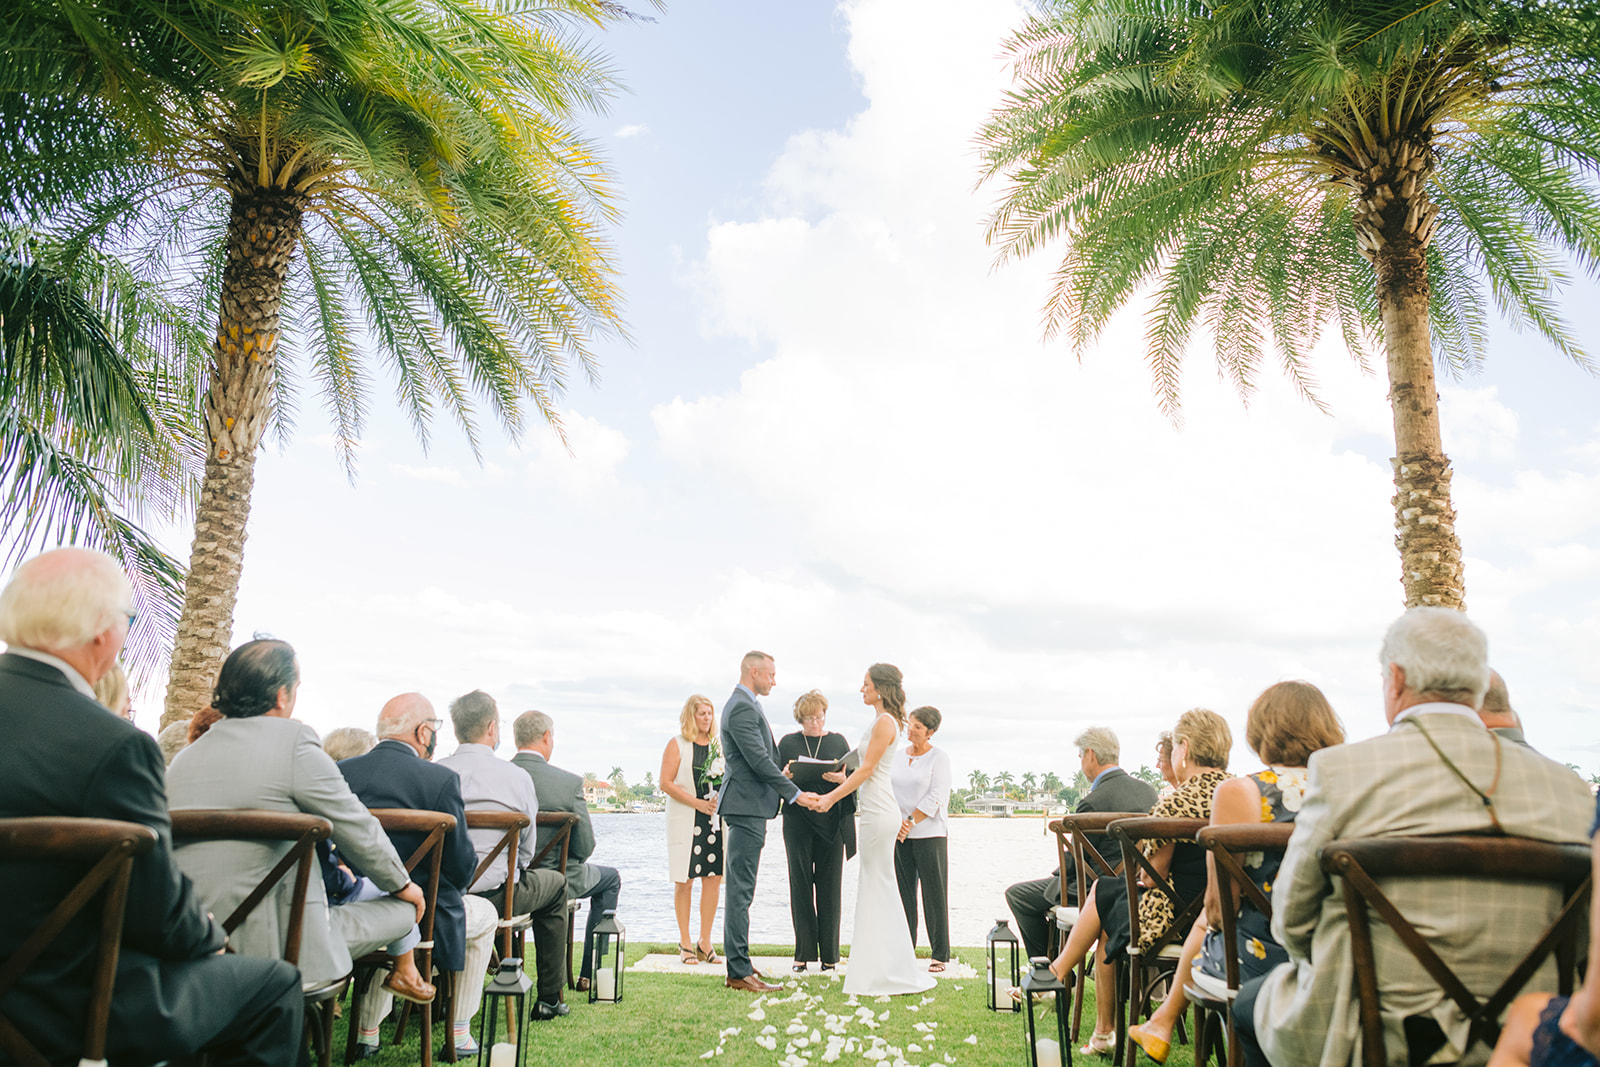 Naples FL wedding photographer captures the bridal party
